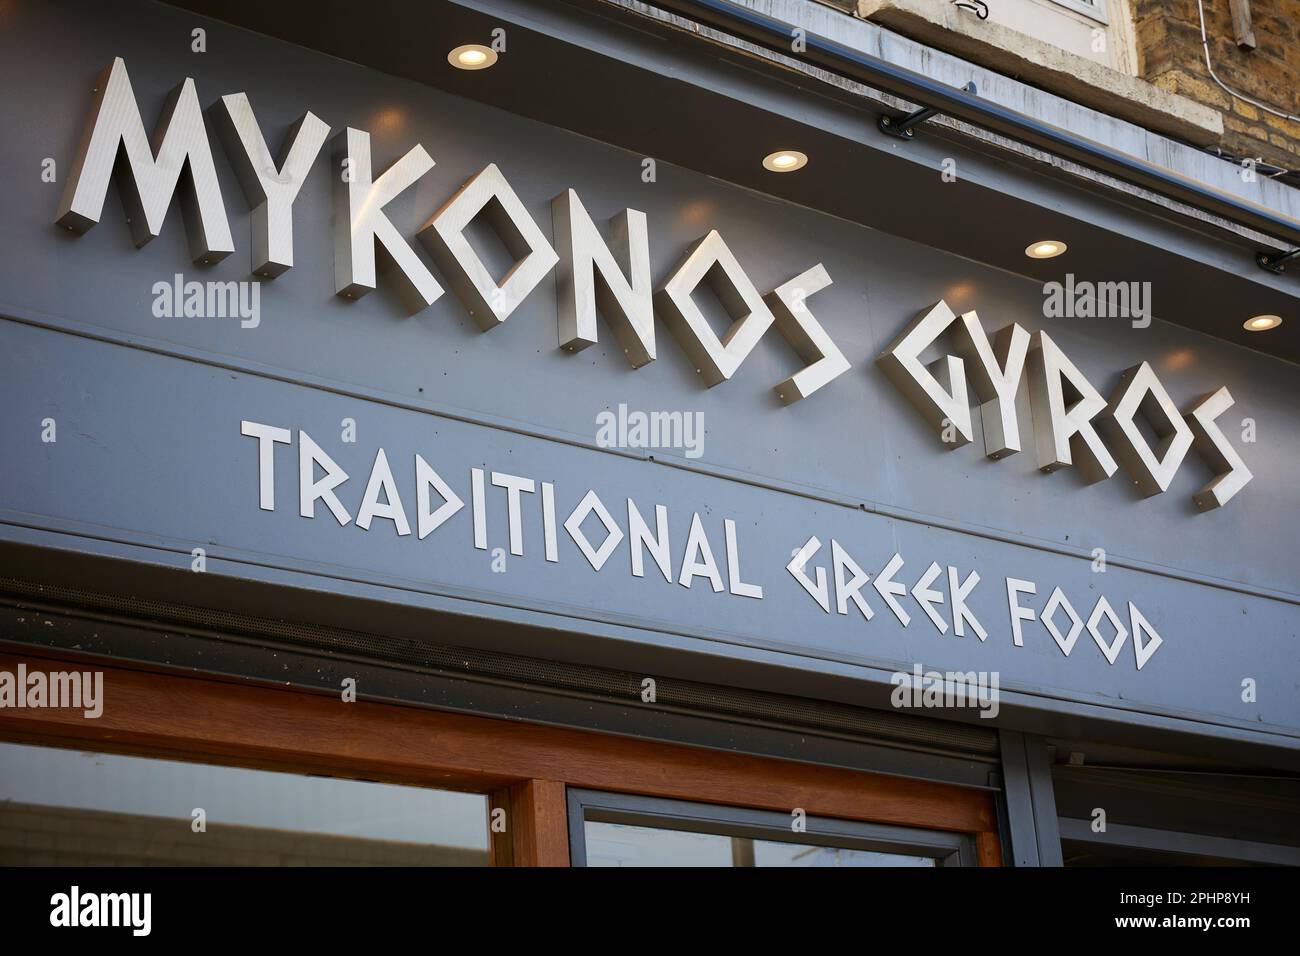 Mykonos Gyros Greek family-run restaurant serving authentic traditional Greek street food, Green Lanes, London Borough of Haringey, England, UK. Stock Photo